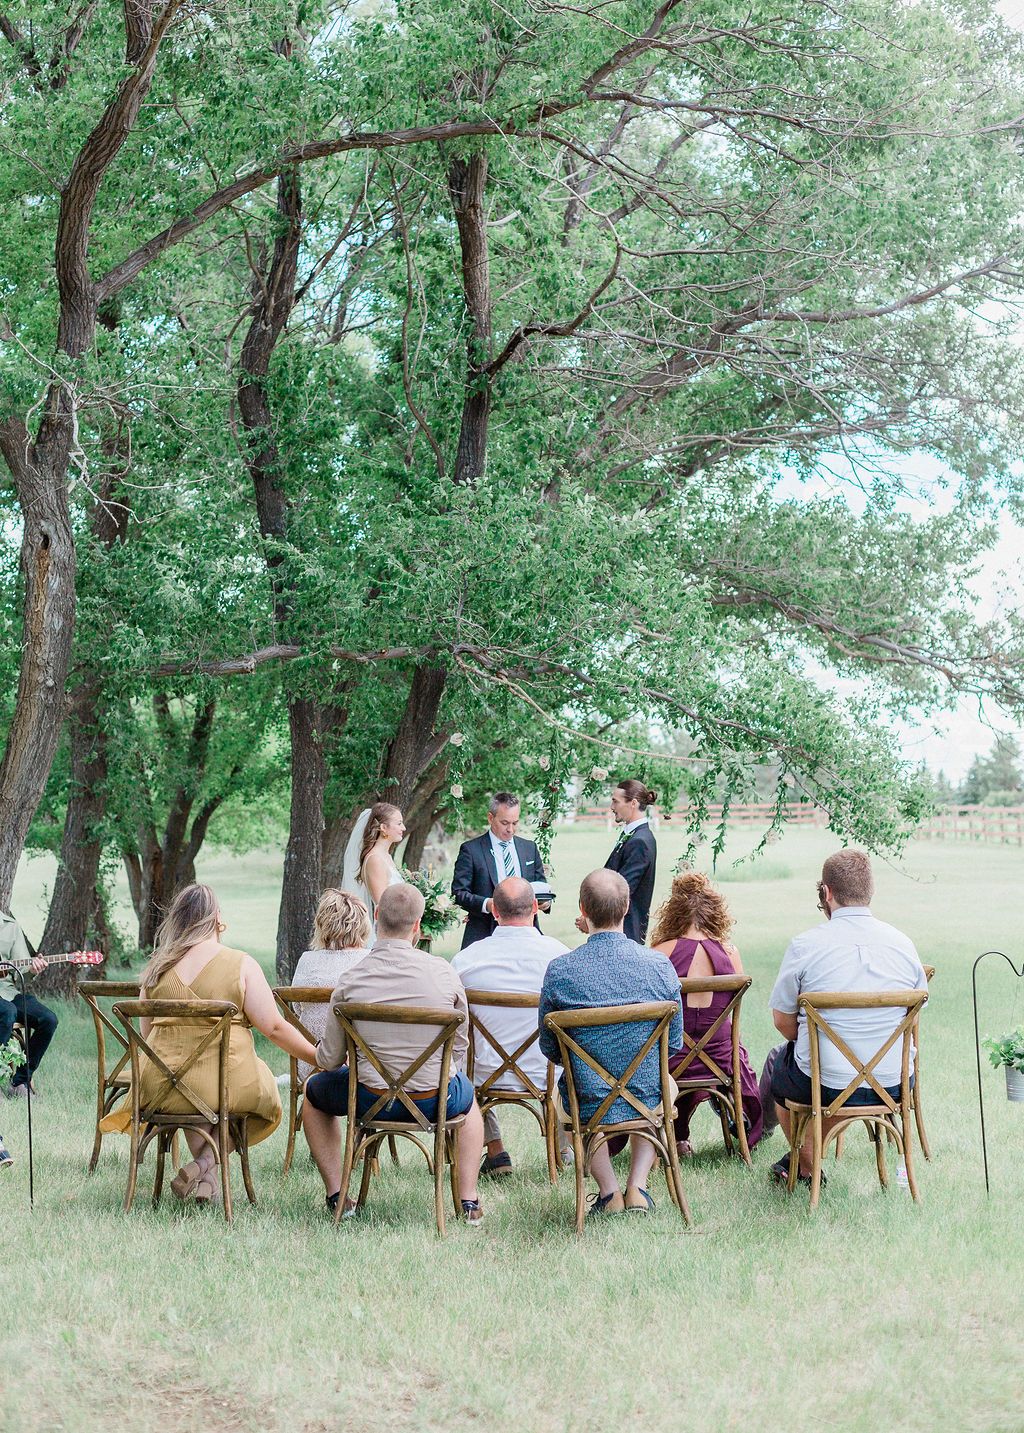 Intimate Wild Flower Wedding - intimate wedding, outdoor wedding ceremony